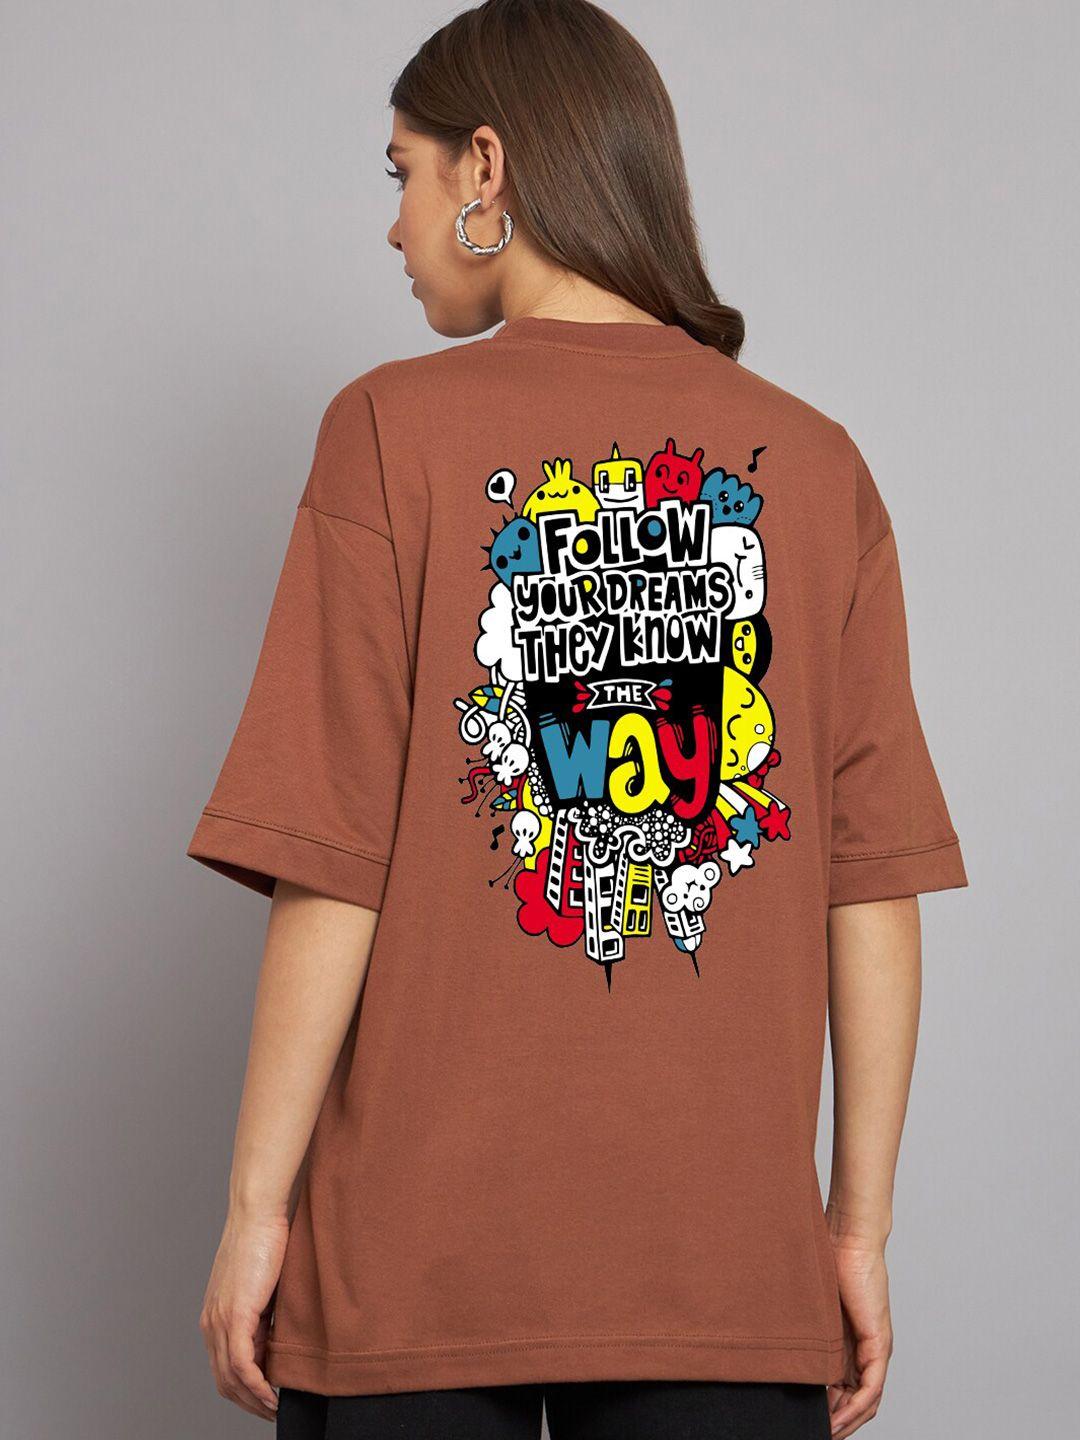 imsa moda typography printed drop shoulder sleeves oversize cotton casual t shirt